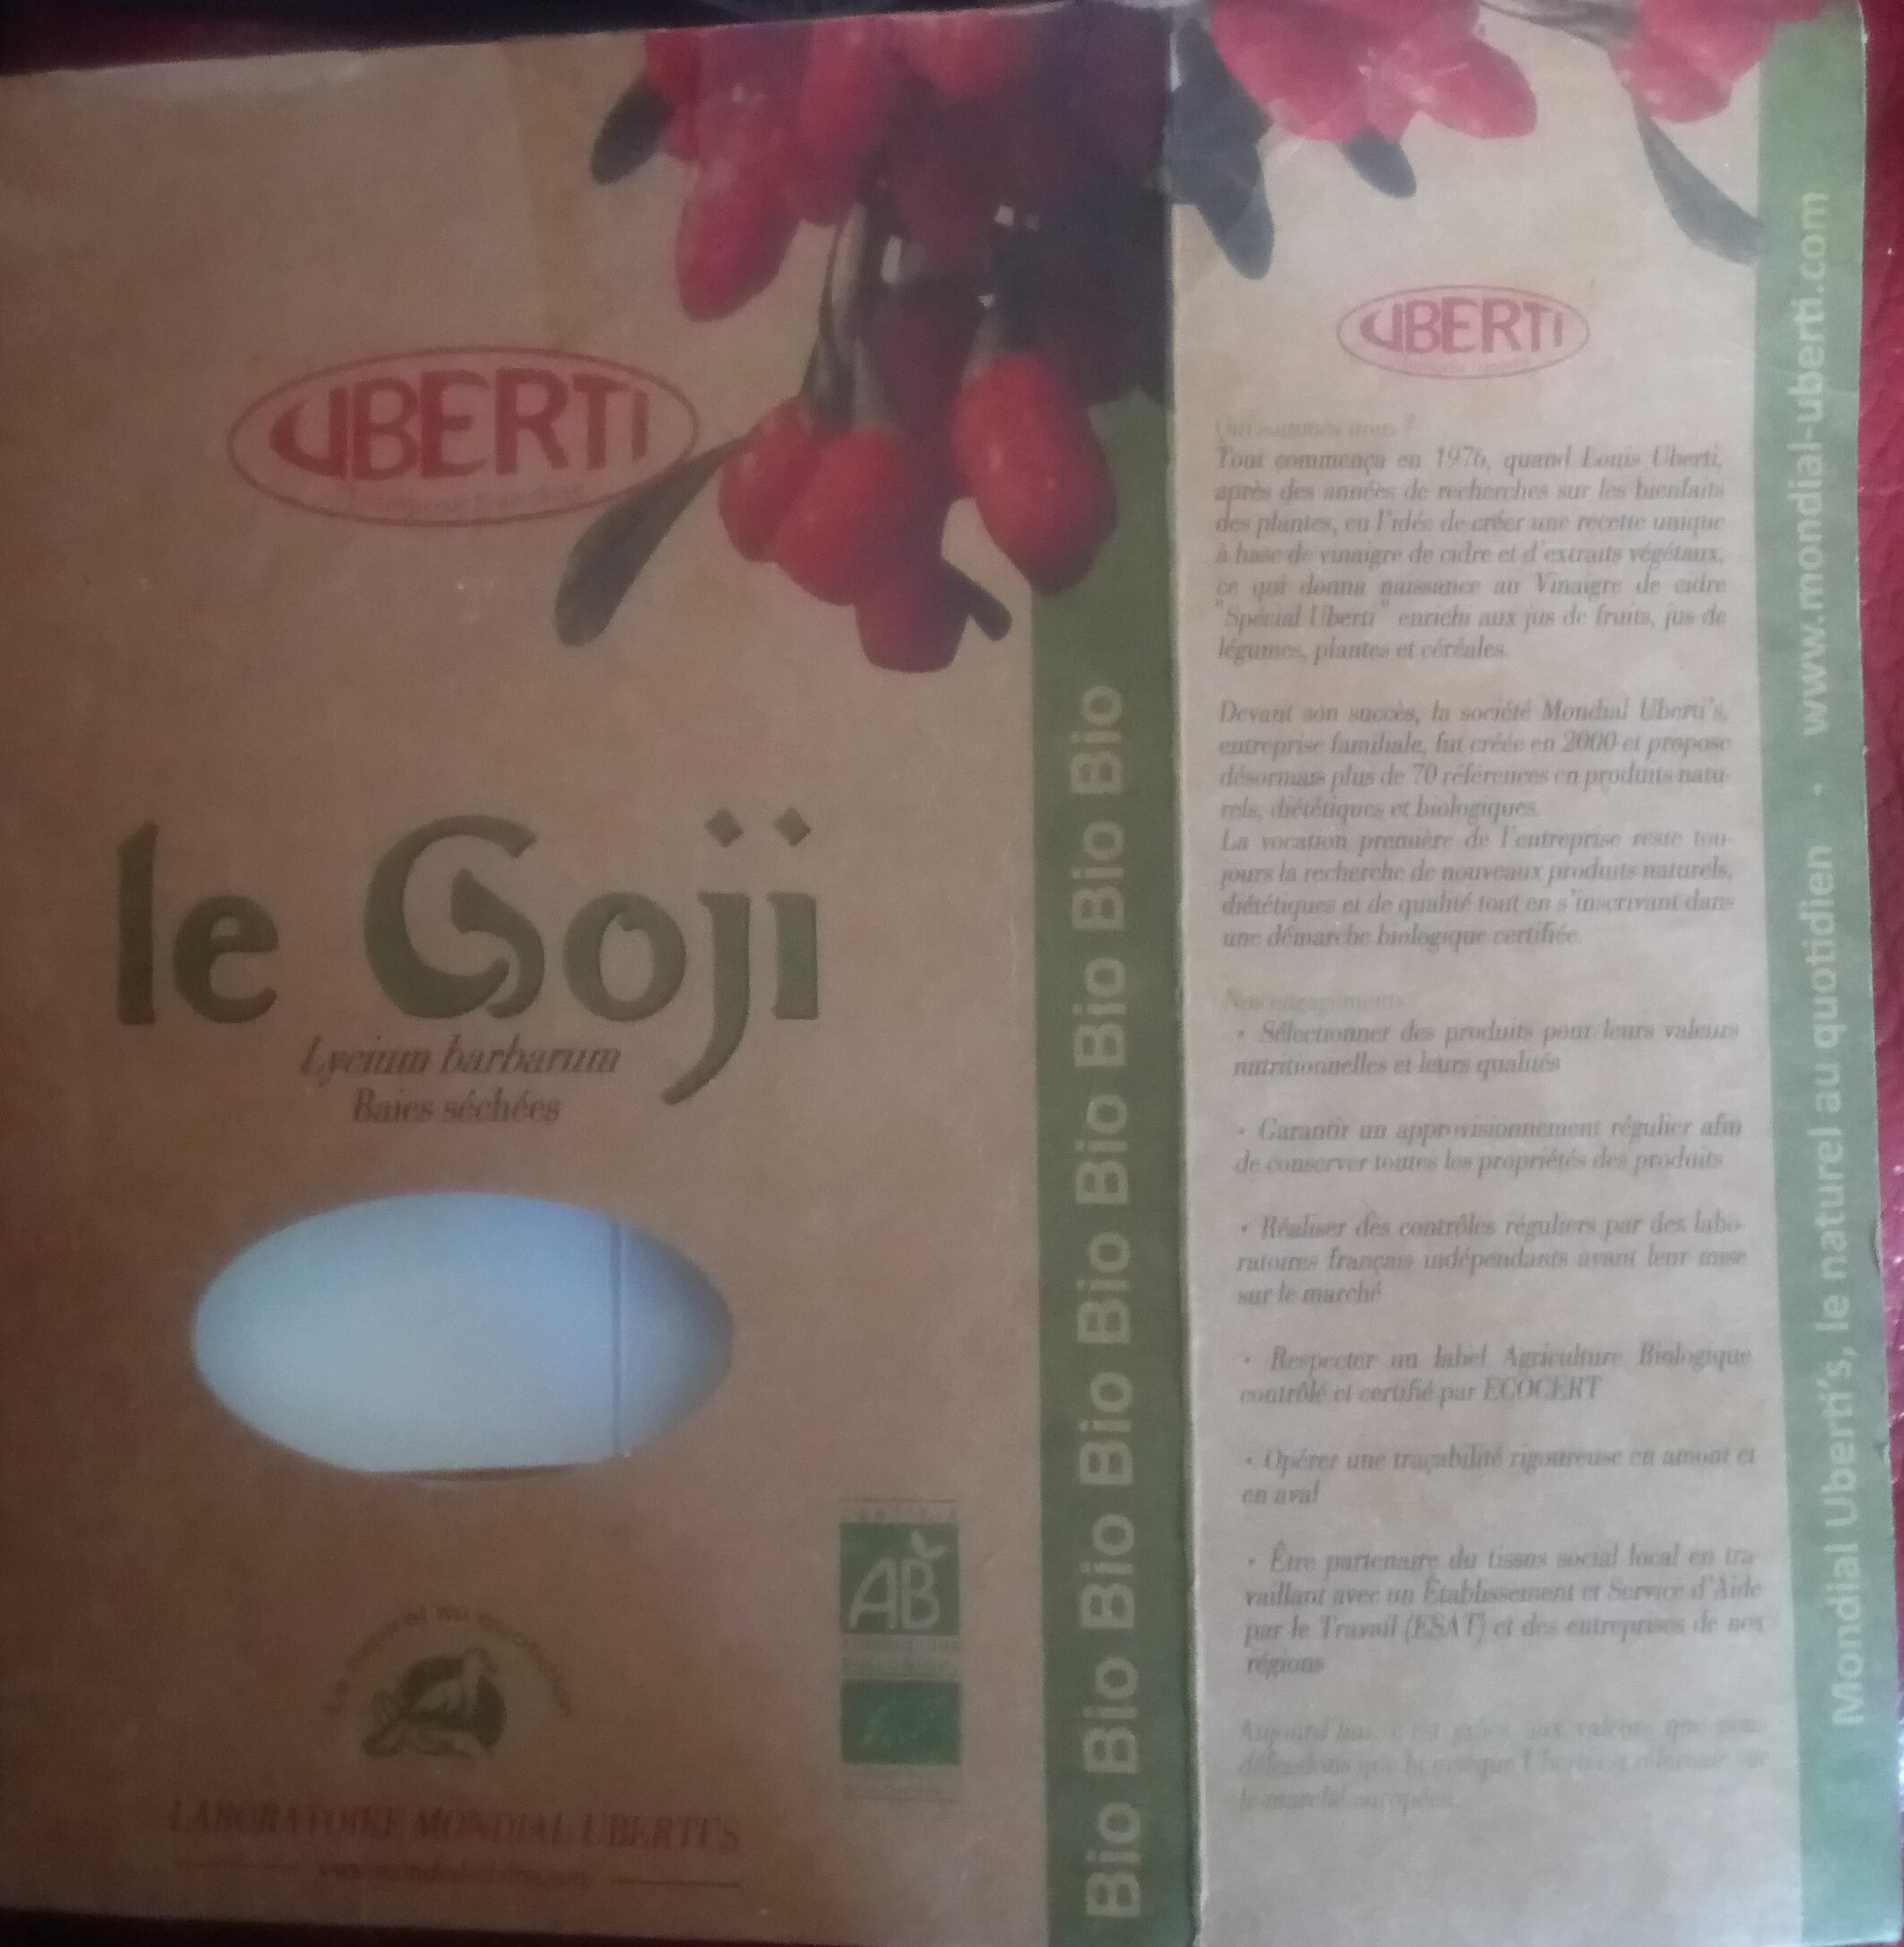 Le goji - Product - fr